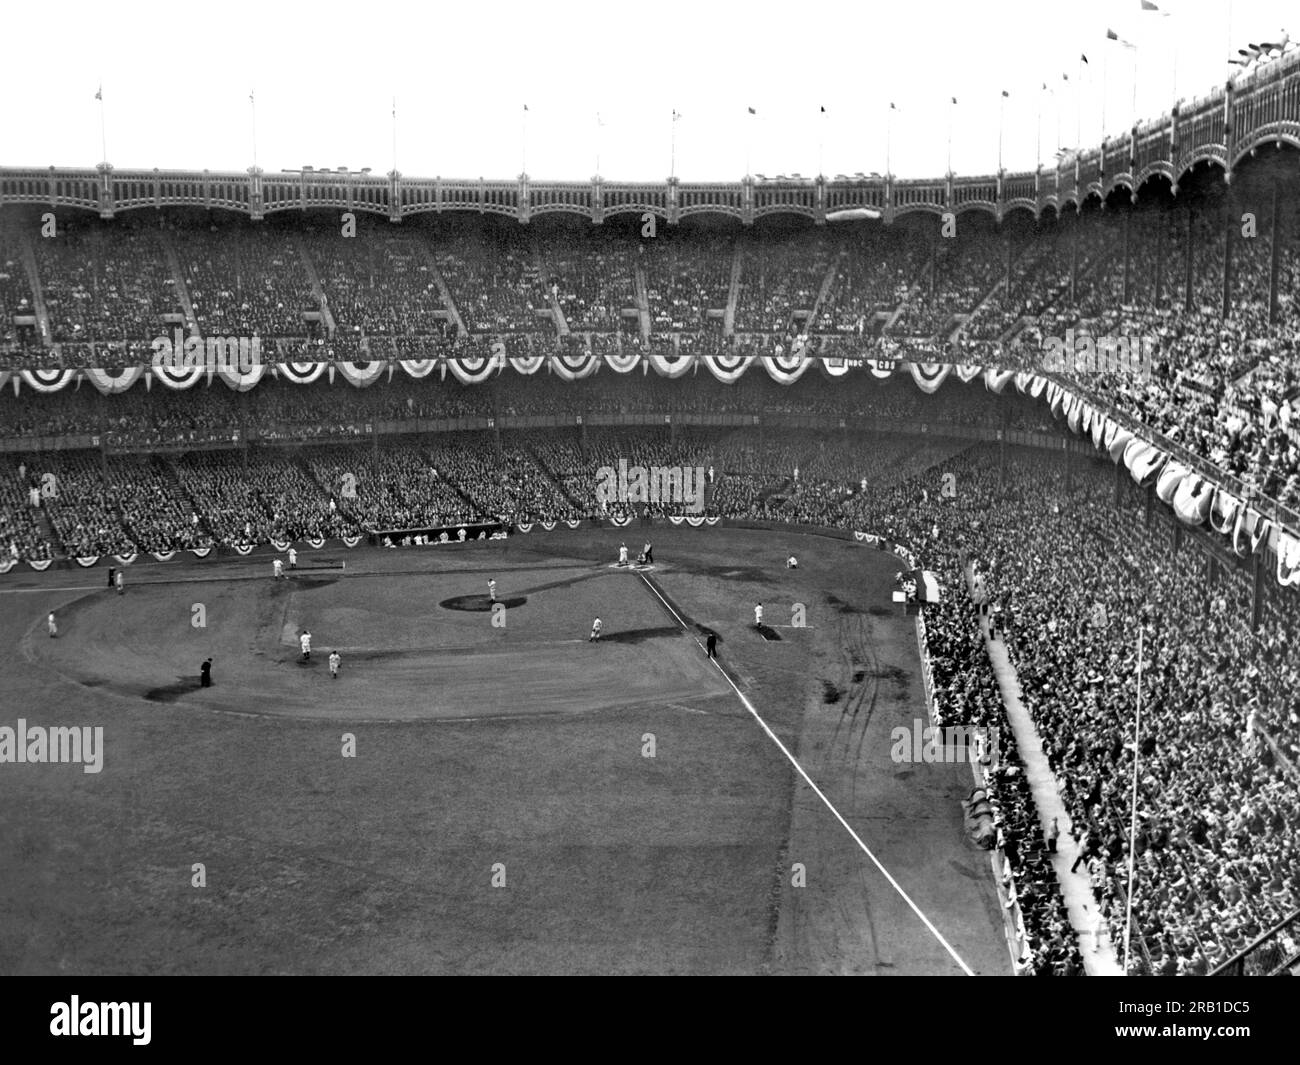 Giants stadium Black and White Stock Photos & Images - Alamy